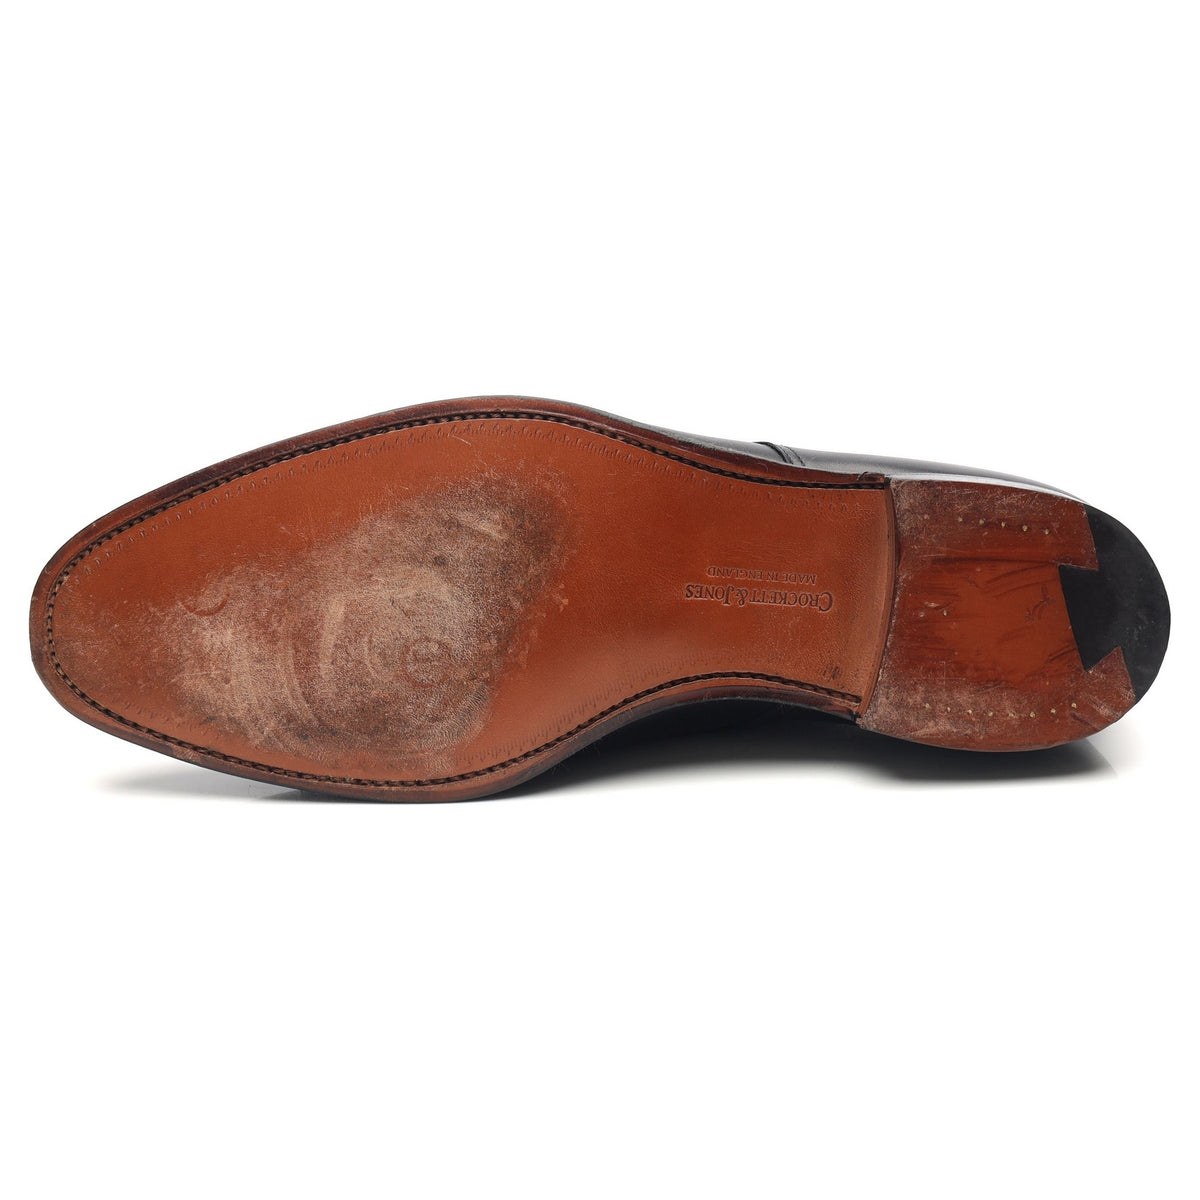 Harrogate' Black Leather Double Monk Straps UK 8 E - Abbot's Shoes